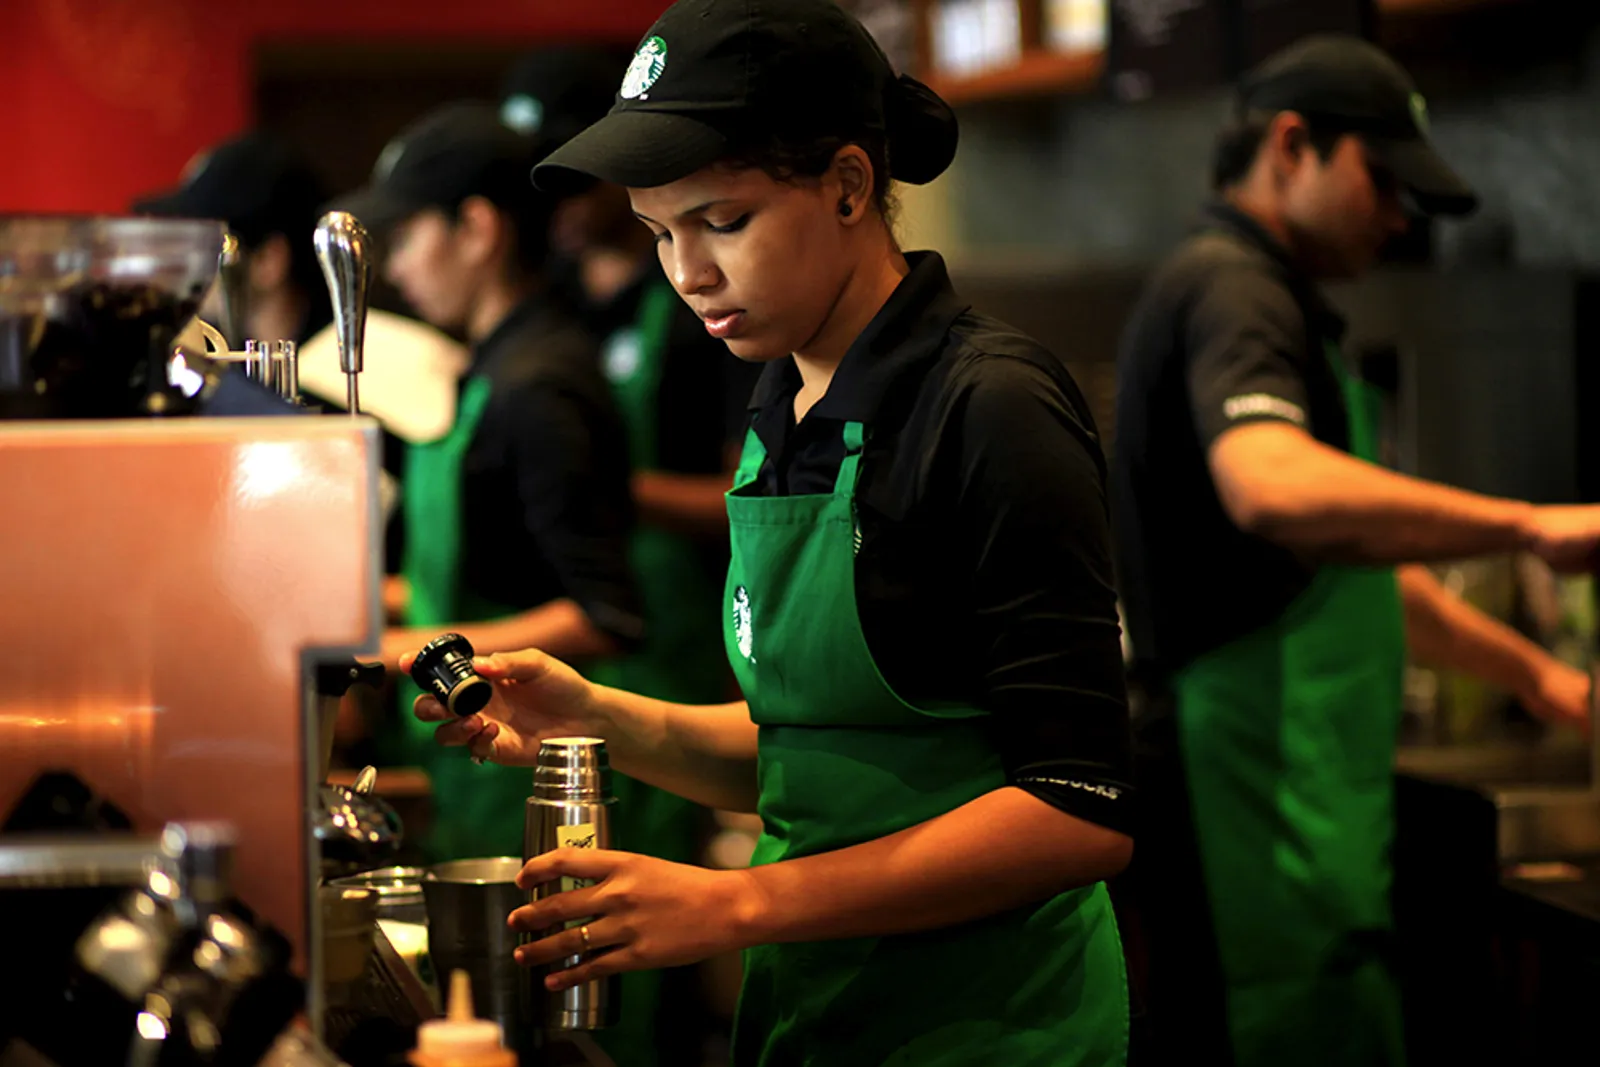 Ini 4 Fakta Unik Pengalaman Berkesan Barista Starbucks